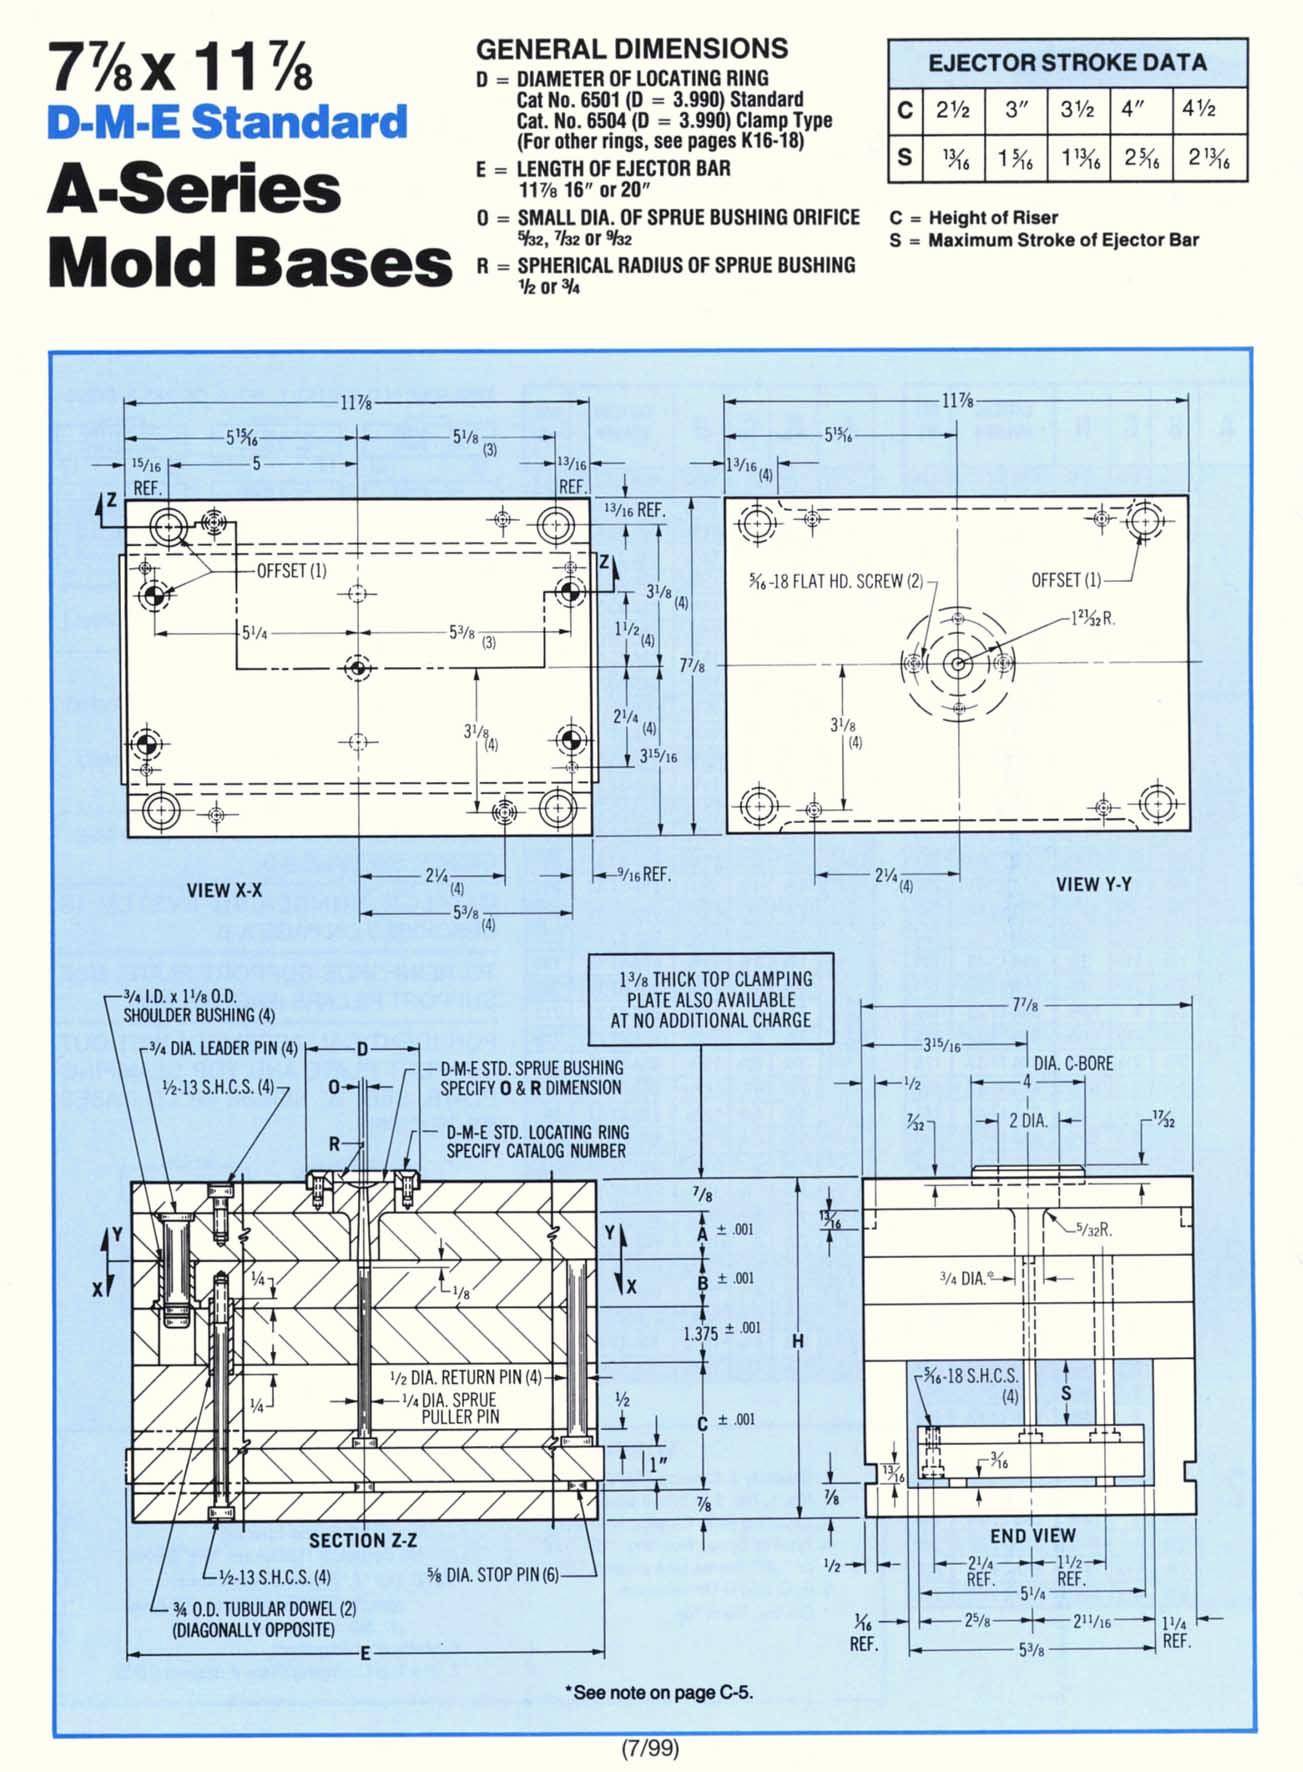 DME A series mold base 812A